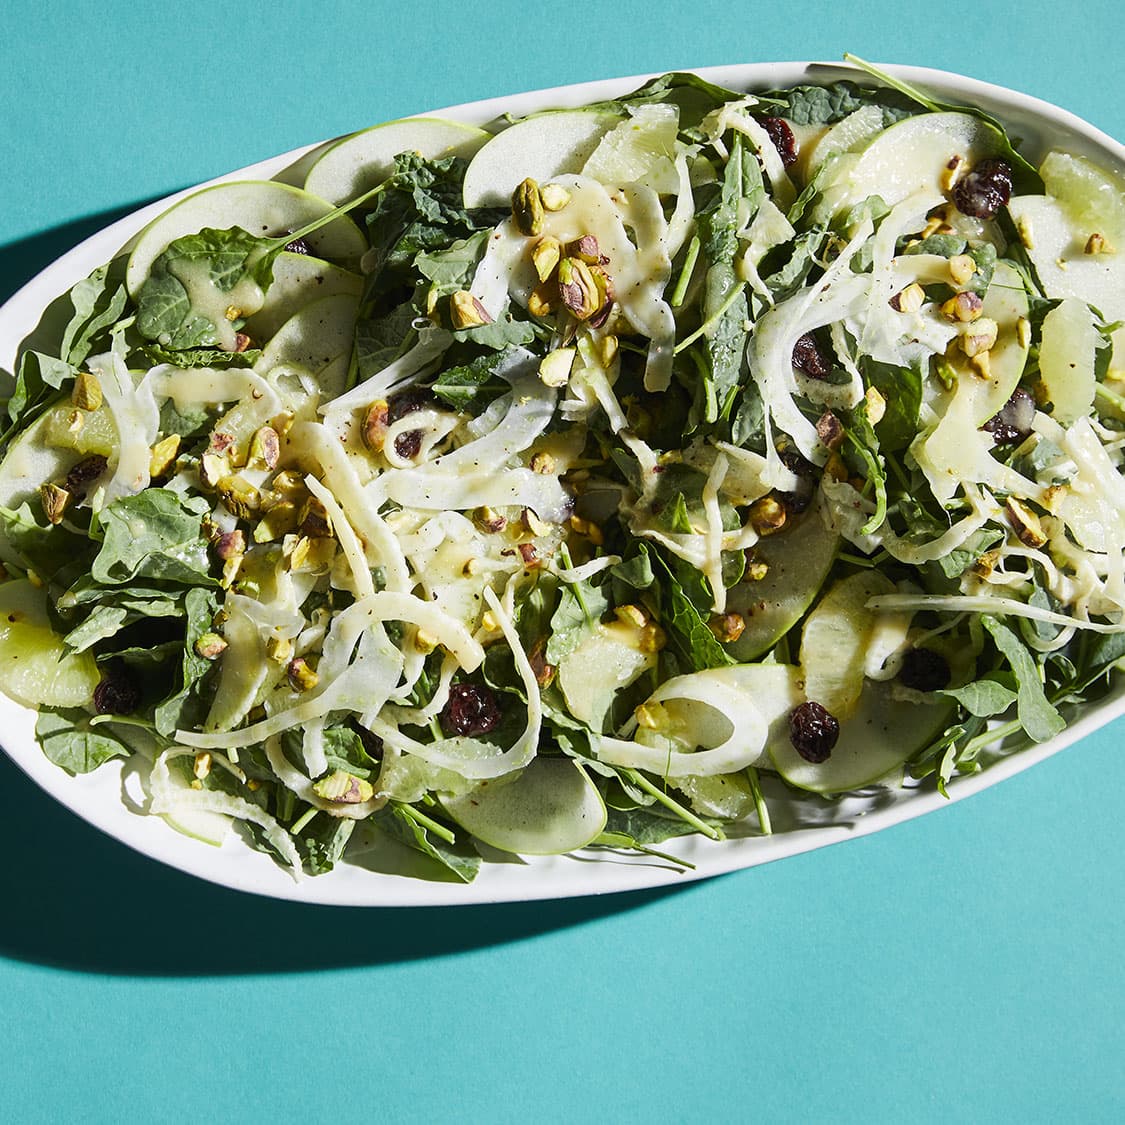 https://fleishigs.com/images/mobile-app/recipes/1524-list-fruity-green-salad.jpg